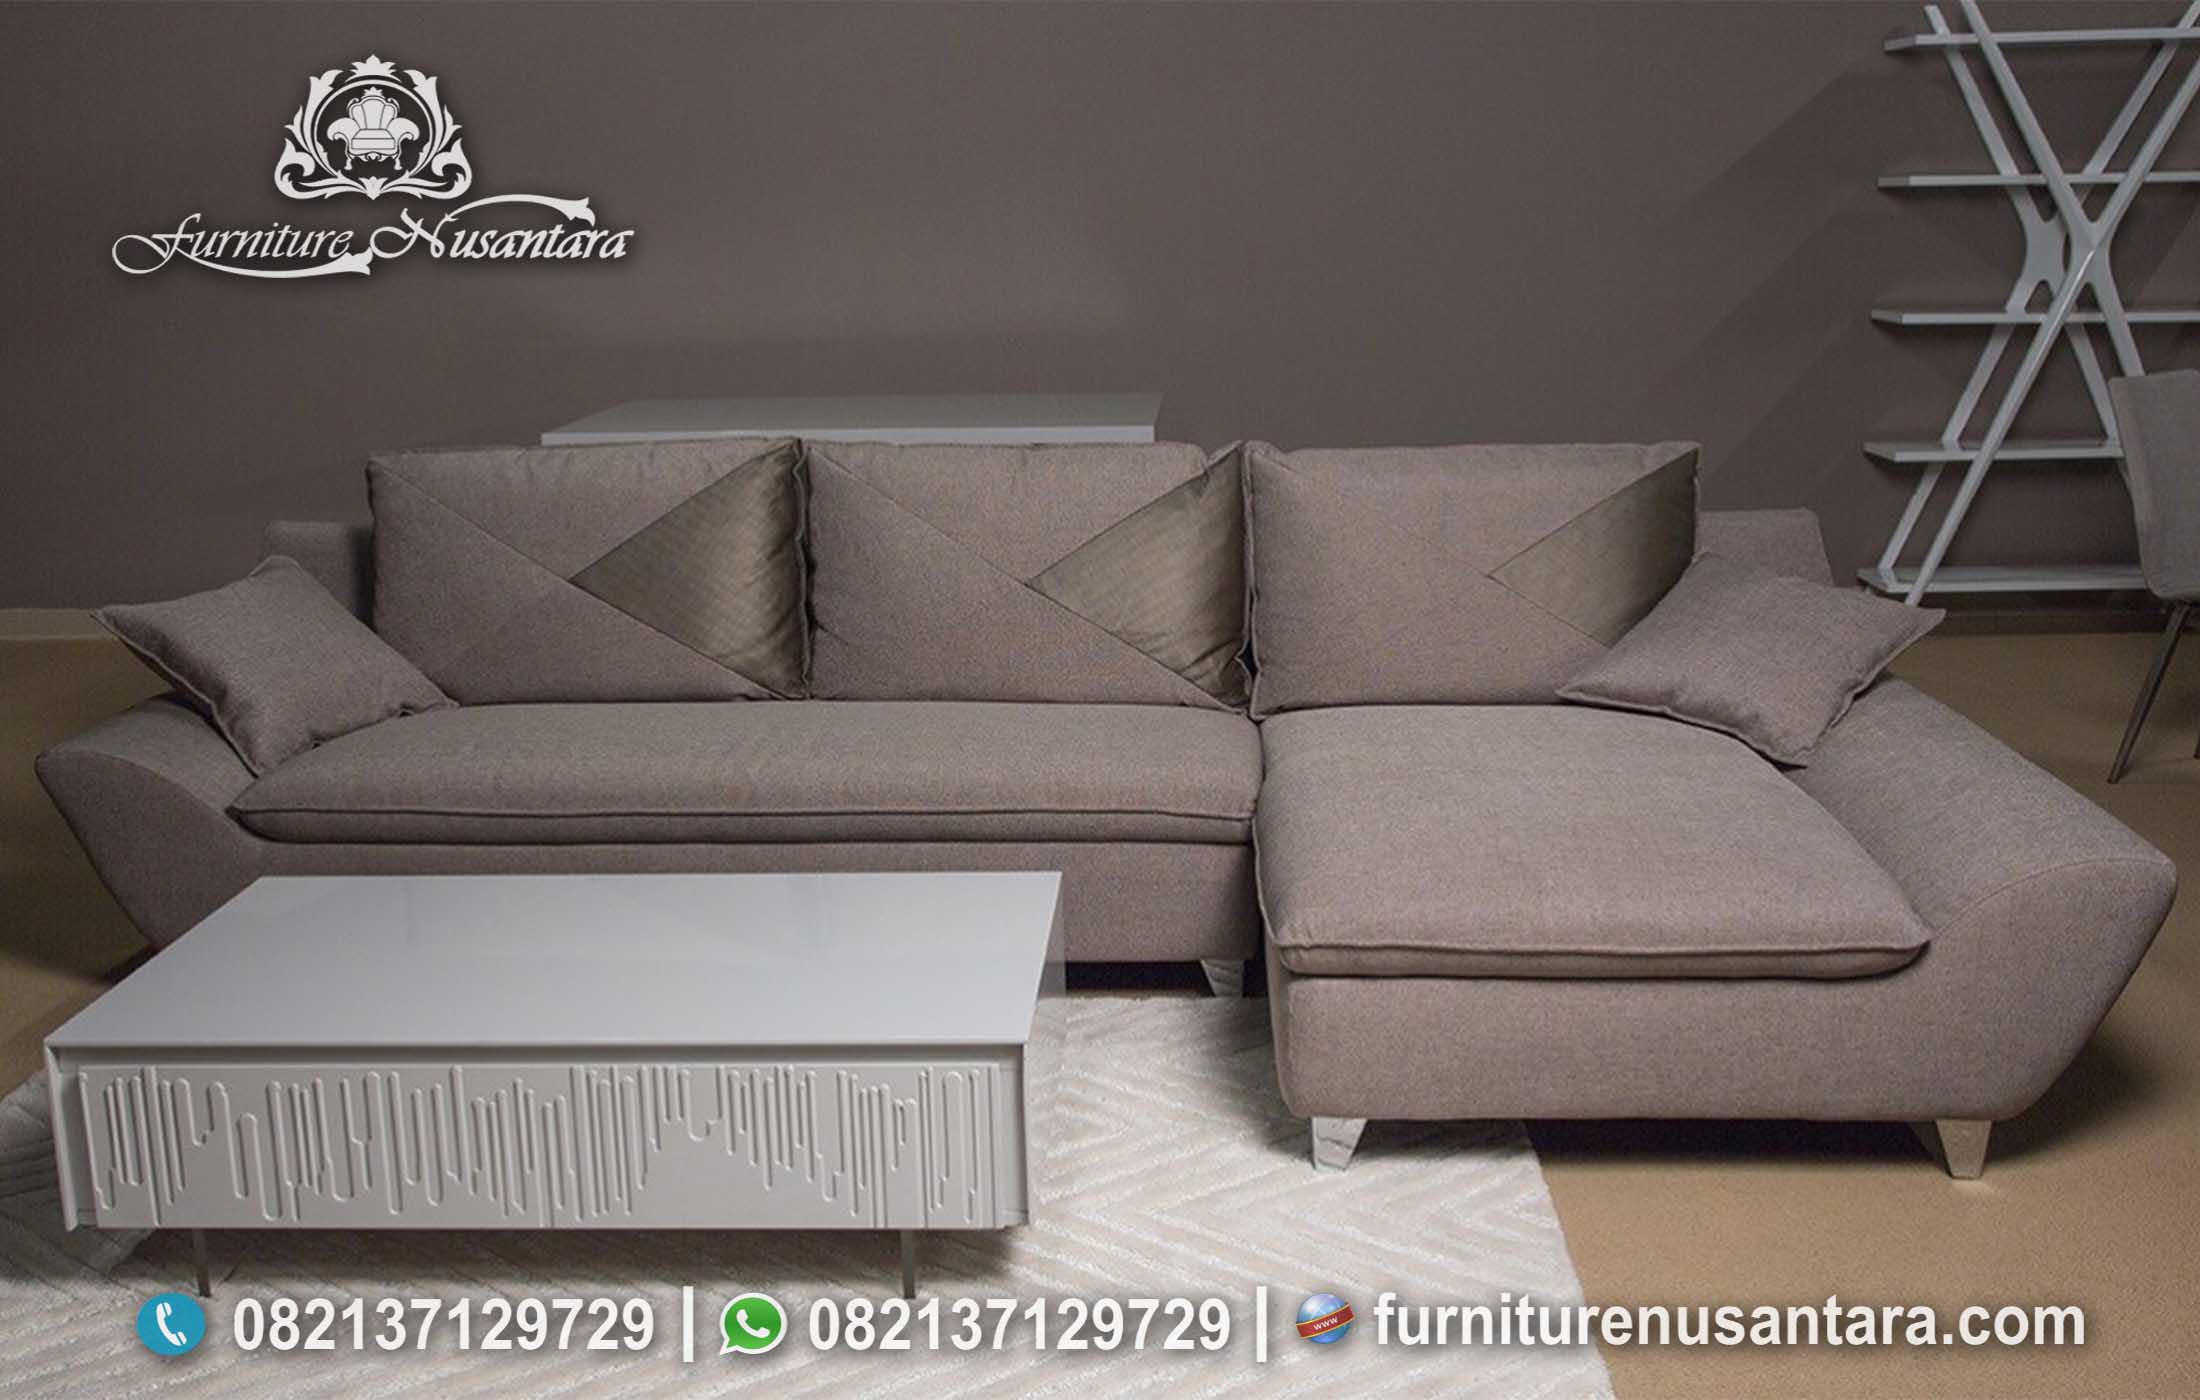 Harga Sofa Tamu Sudut 2021 ST-80, Furniture Nusantara